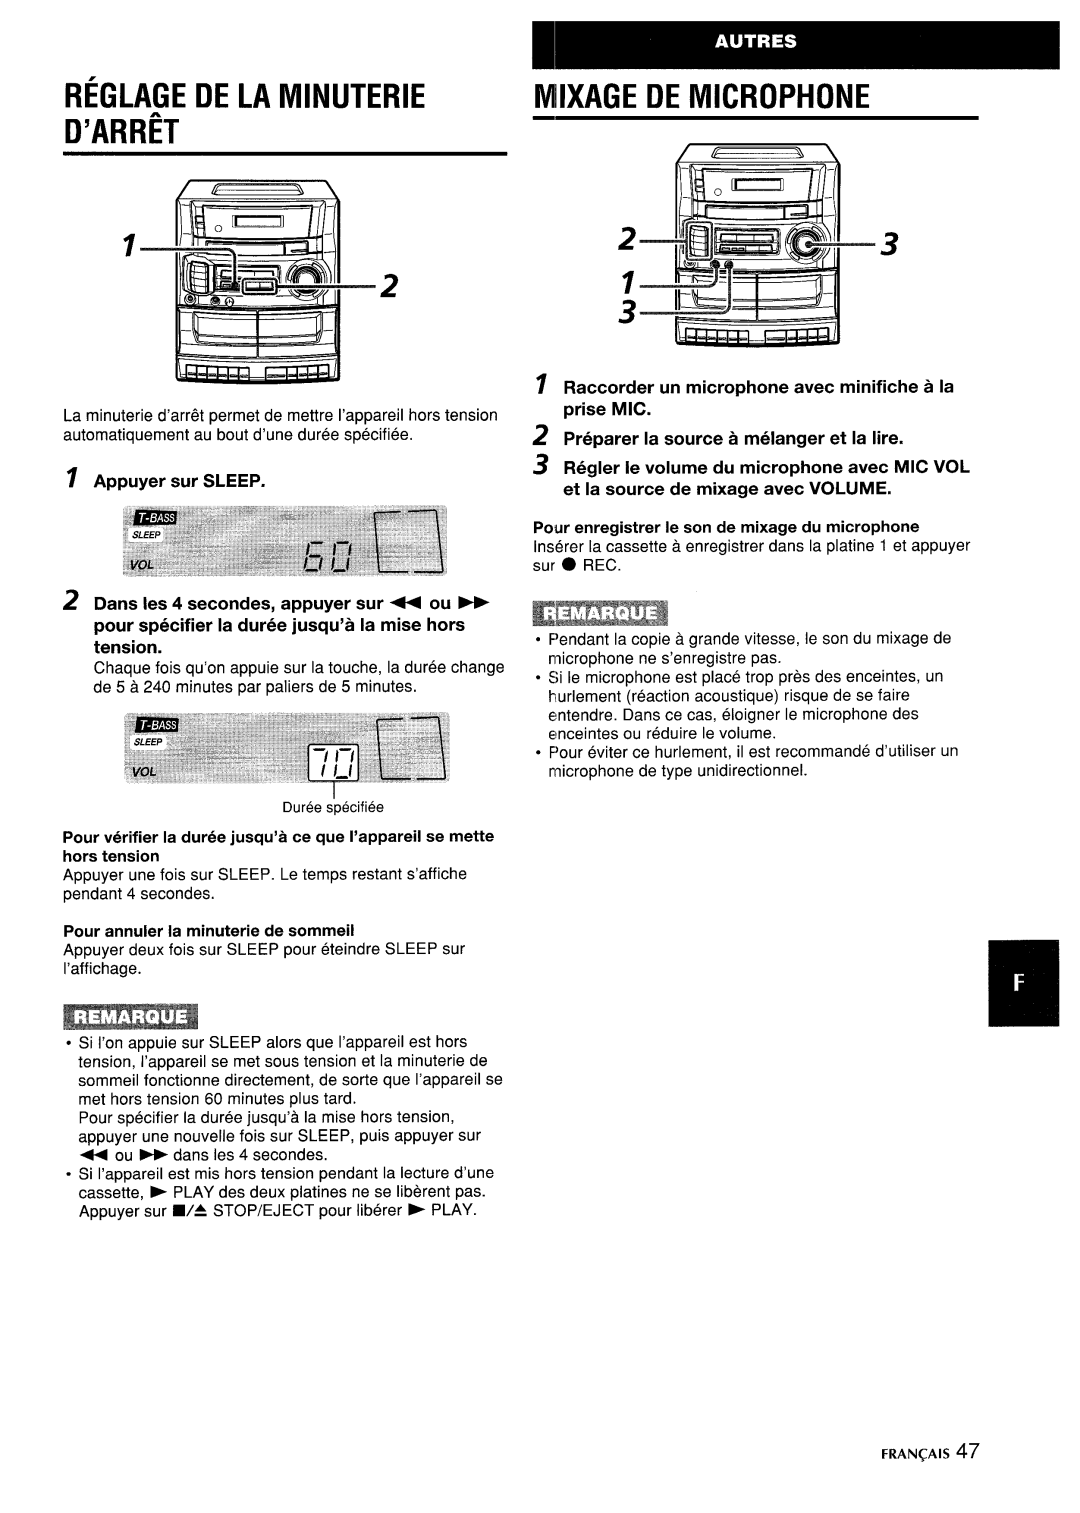 Aiwa CA-DW635 manual Reglage De La Minuterie D’Arr~T, Miixage De Microphone, Appuyer sur SLEEP 